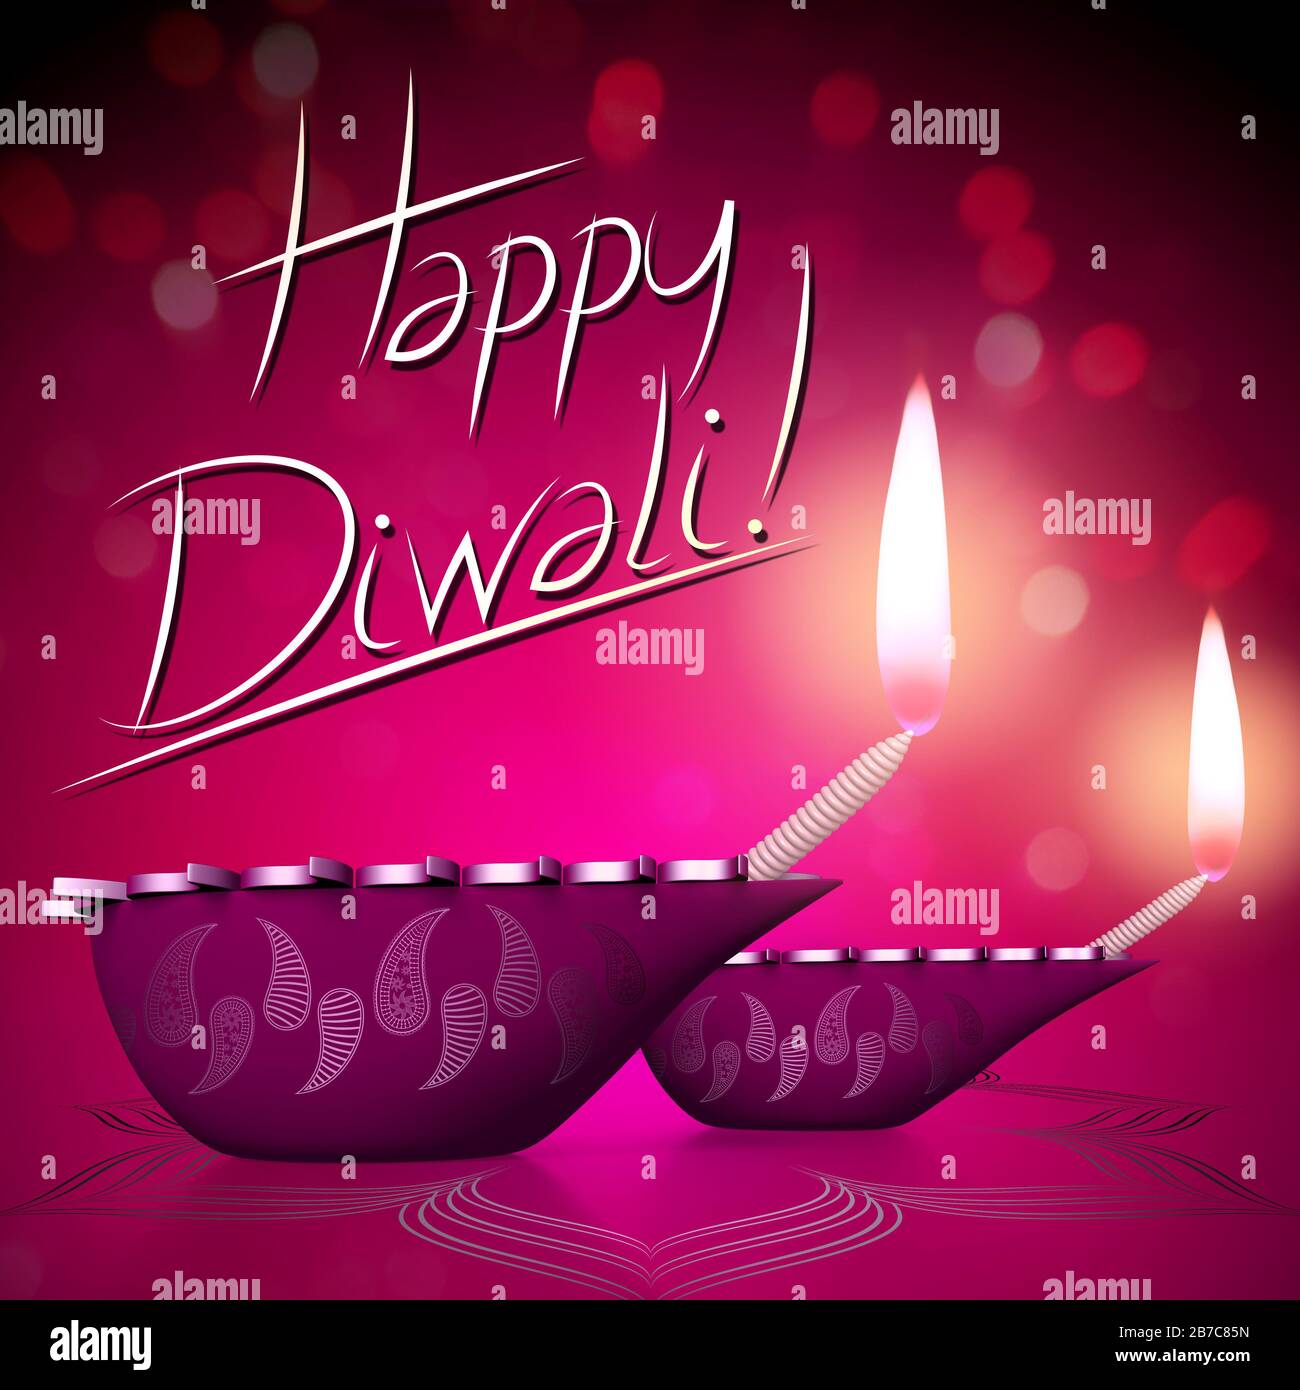 Happy Diwali/ Deepavali - card/ illustration Stock Photo - Alamy